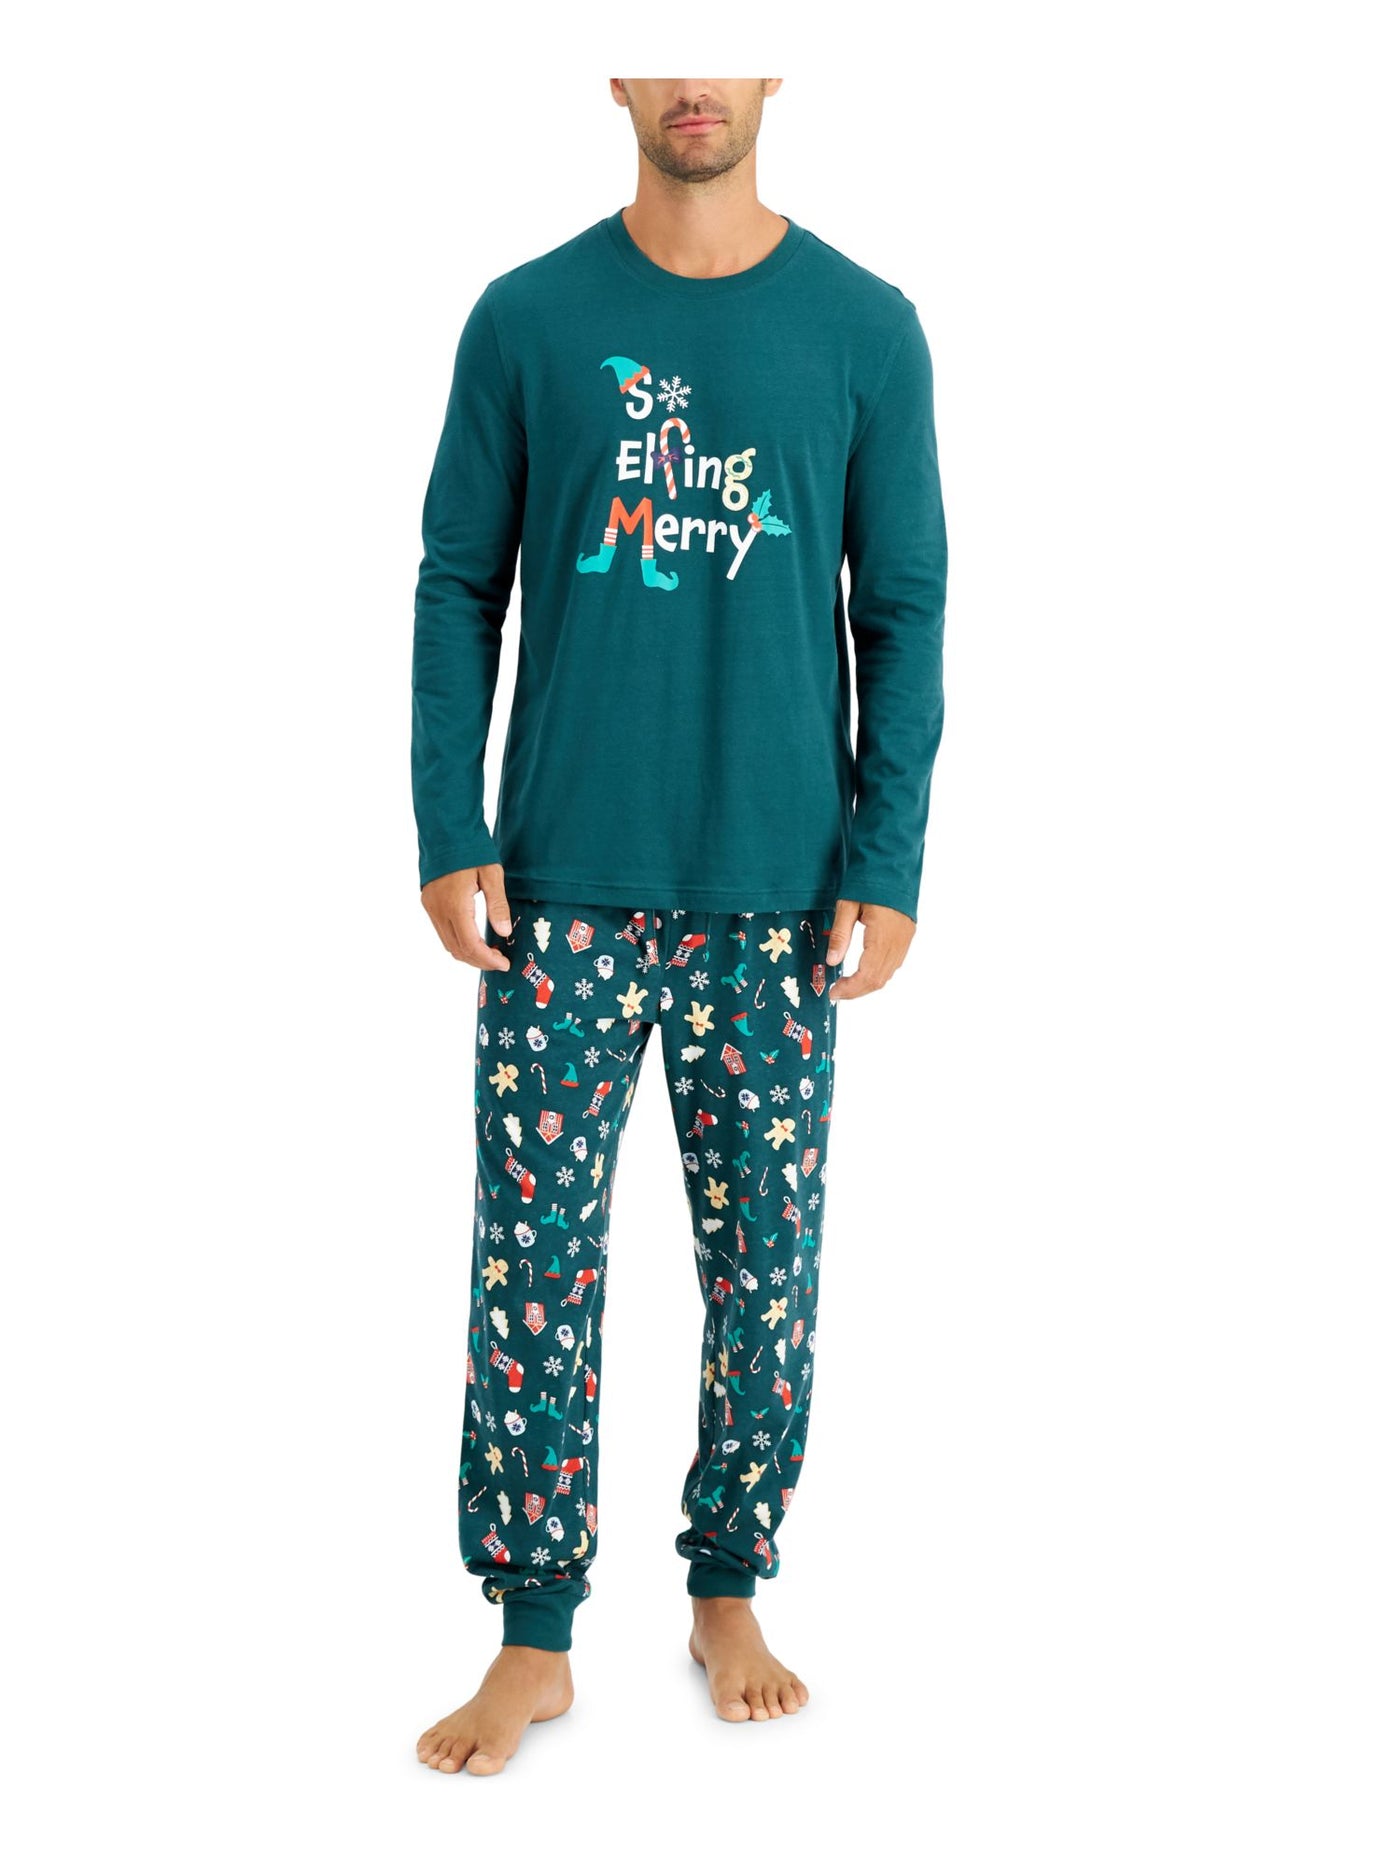 FAMILY PJs Mens Green Printed Elastic Band T-Shirt Top Cuffed Pants Pajamas XXL